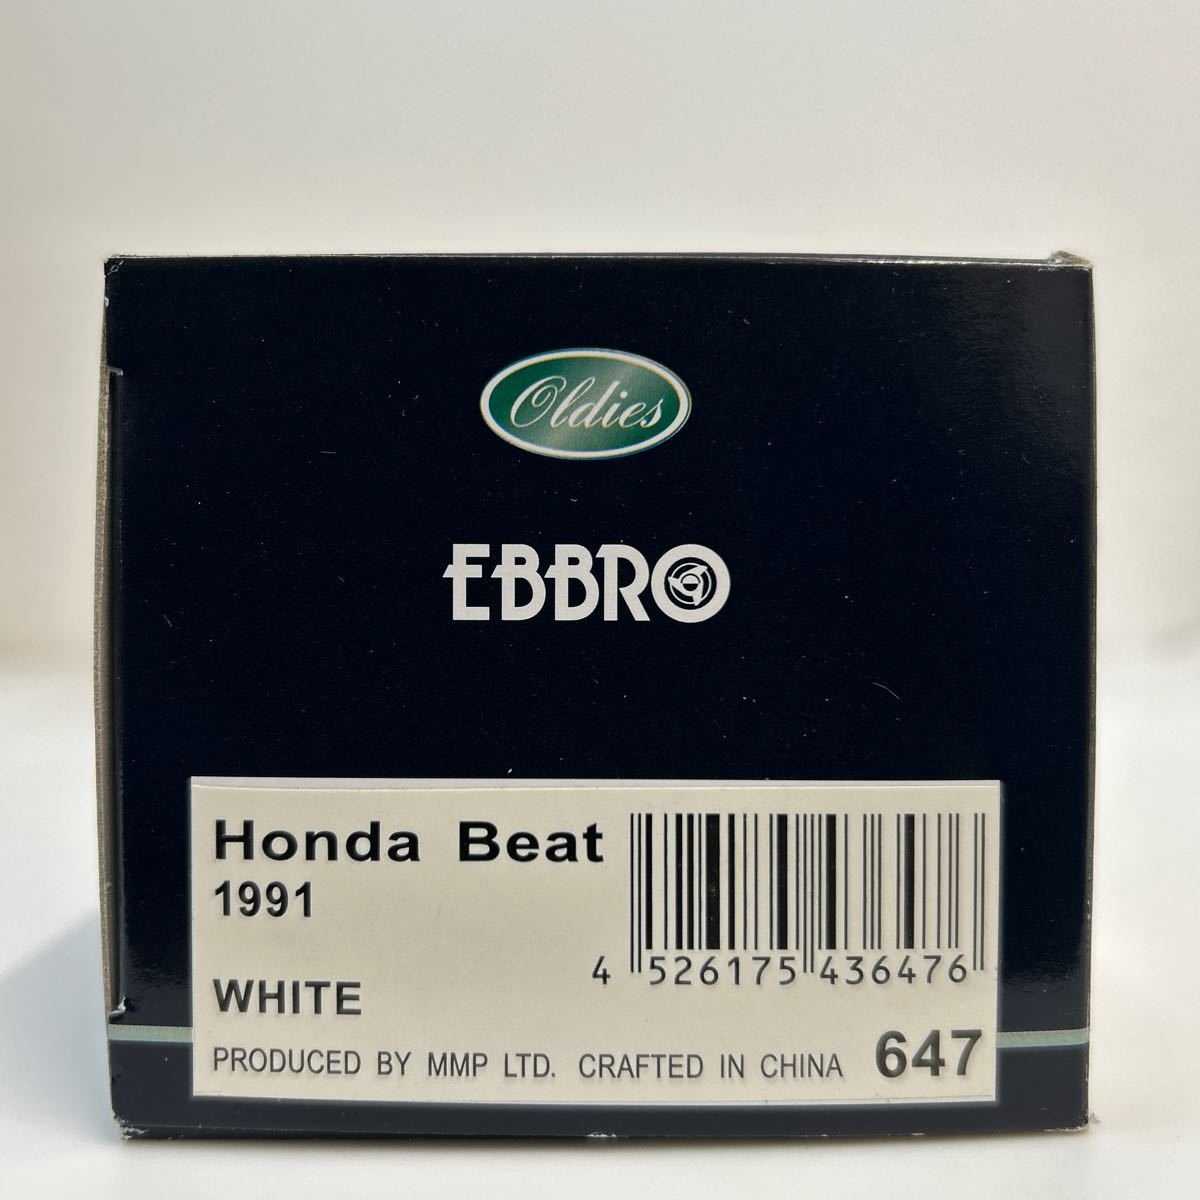 EBBRO 1/43 HONDA BEAT 1991 White エブロ ホンダ ビート ホワイト 幌 トノカバーパーツ付き 旧車 ミニカー モデルカー_画像9